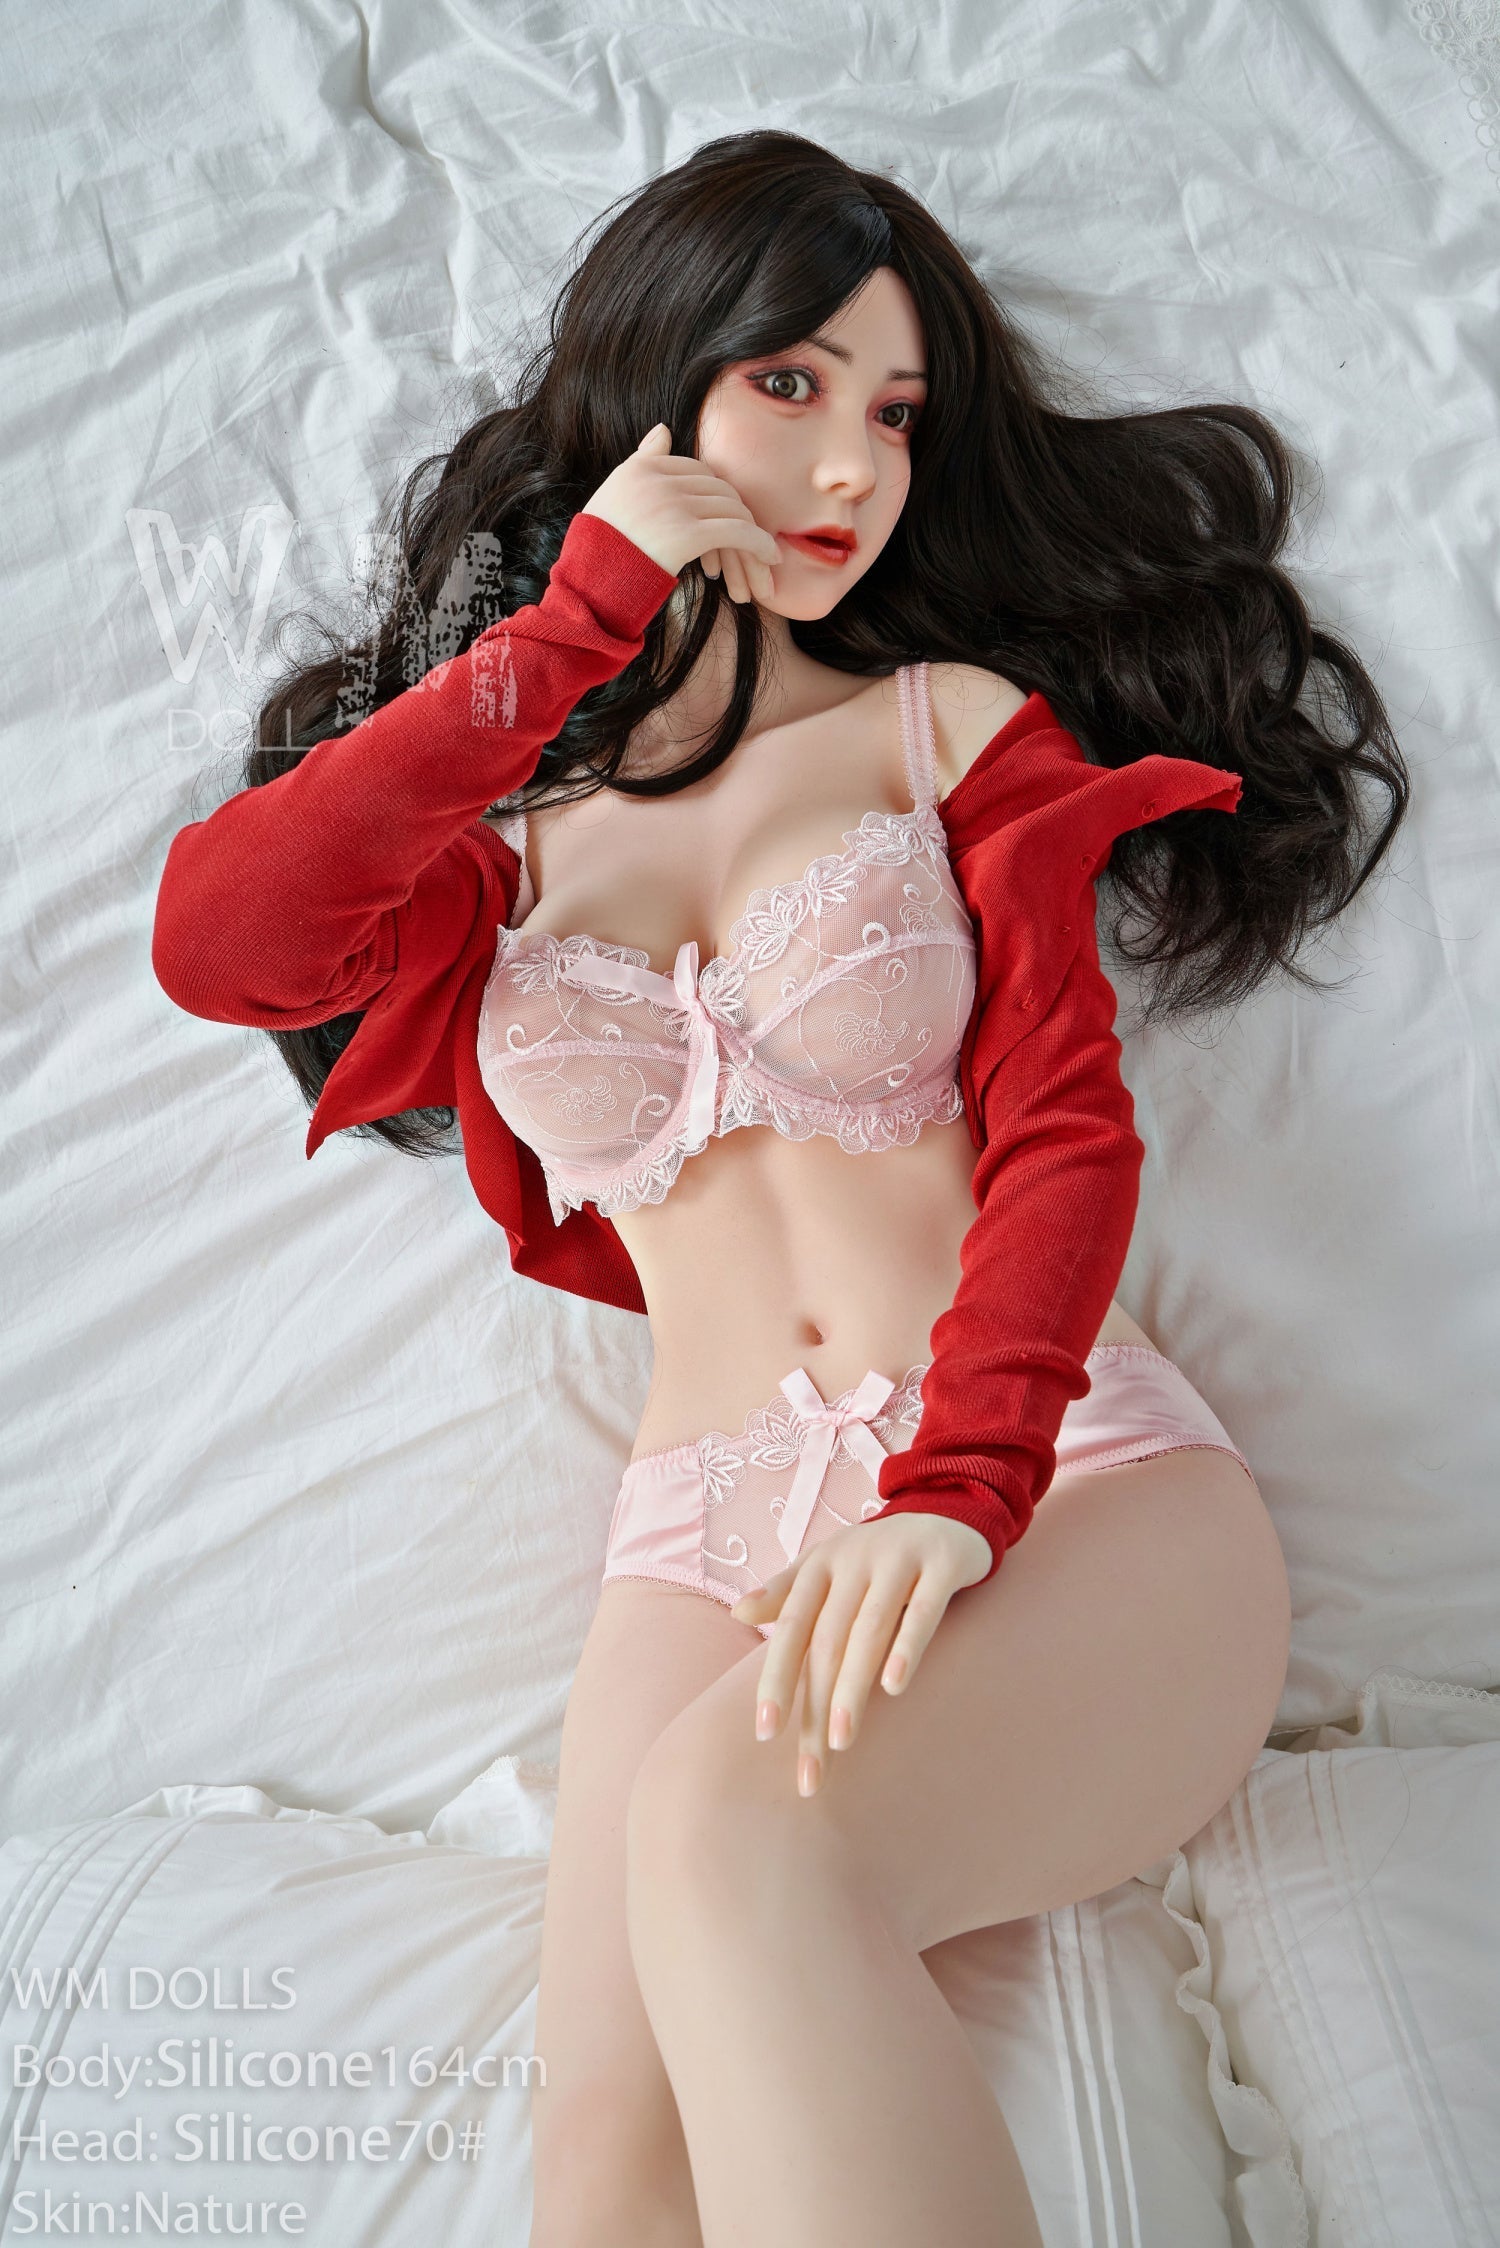 WM Doll 164 cm D Fusion - Margaret | Buy Sex Dolls at DOLLS ACTUALLY